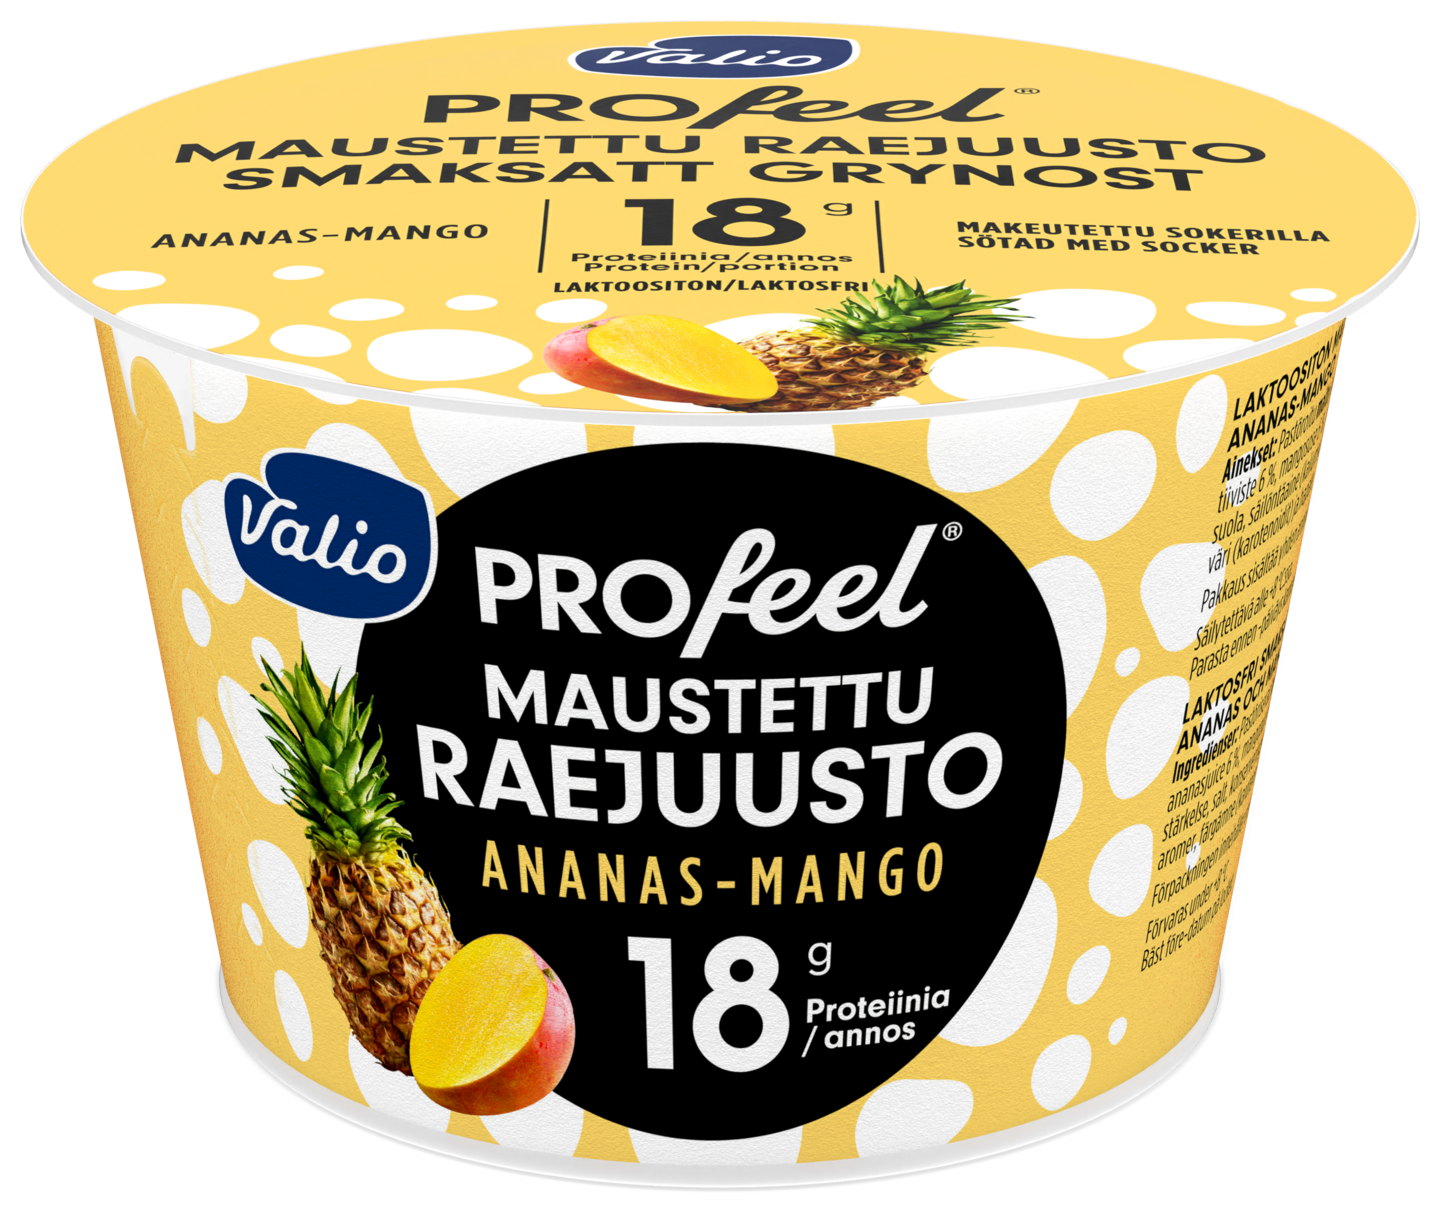 Valio PROfeel maustettu raejuusto 170g ananas-mango laktoositon